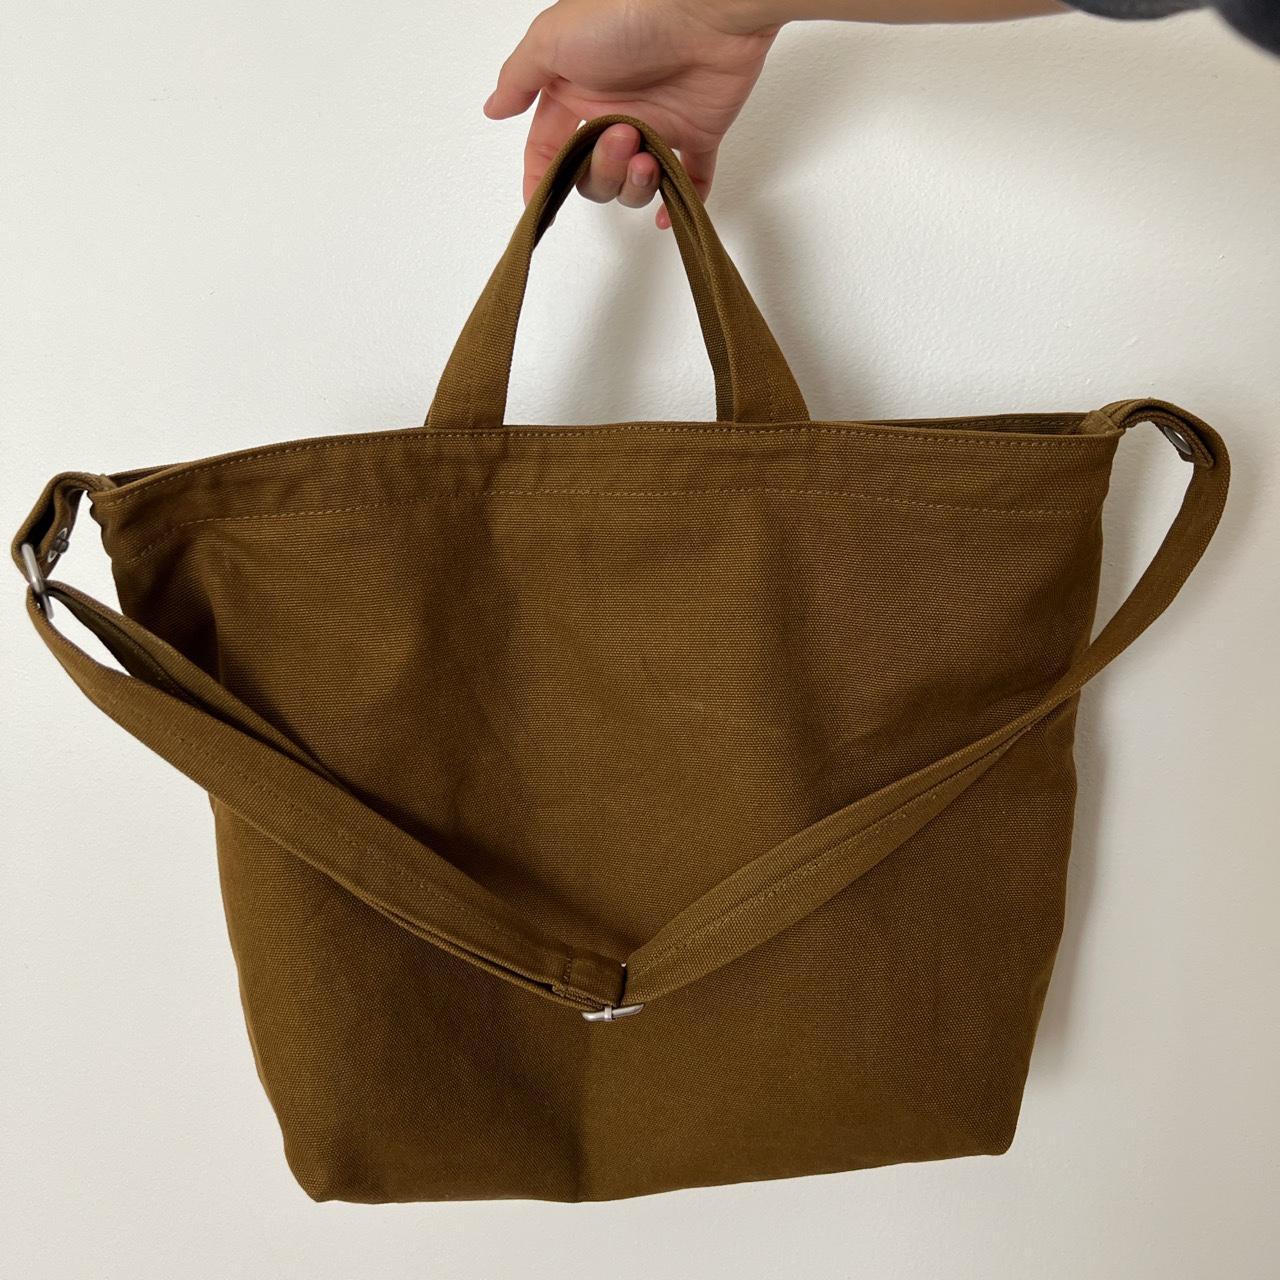 Dandy bag in fuchsia taurillon - The Dandy bags - Aubercy